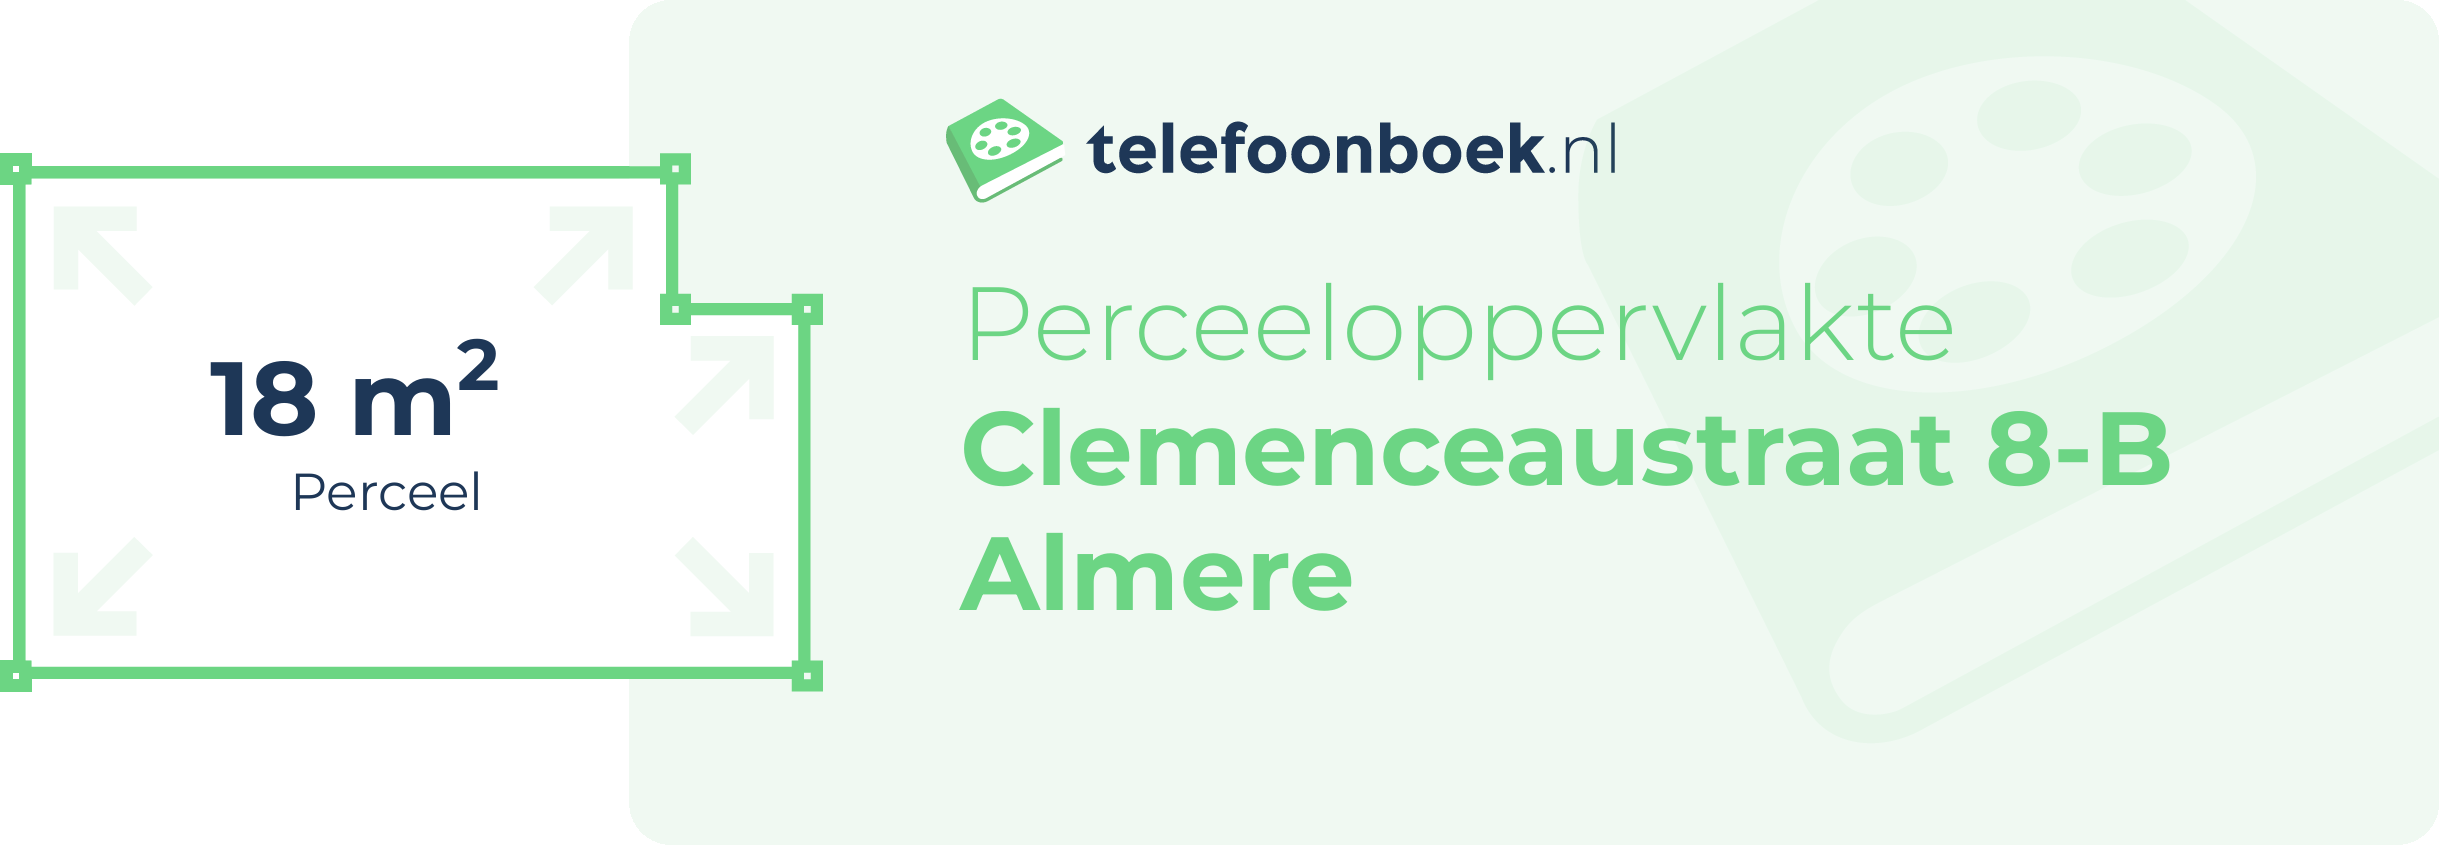 Perceeloppervlakte Clemenceaustraat 8-B Almere